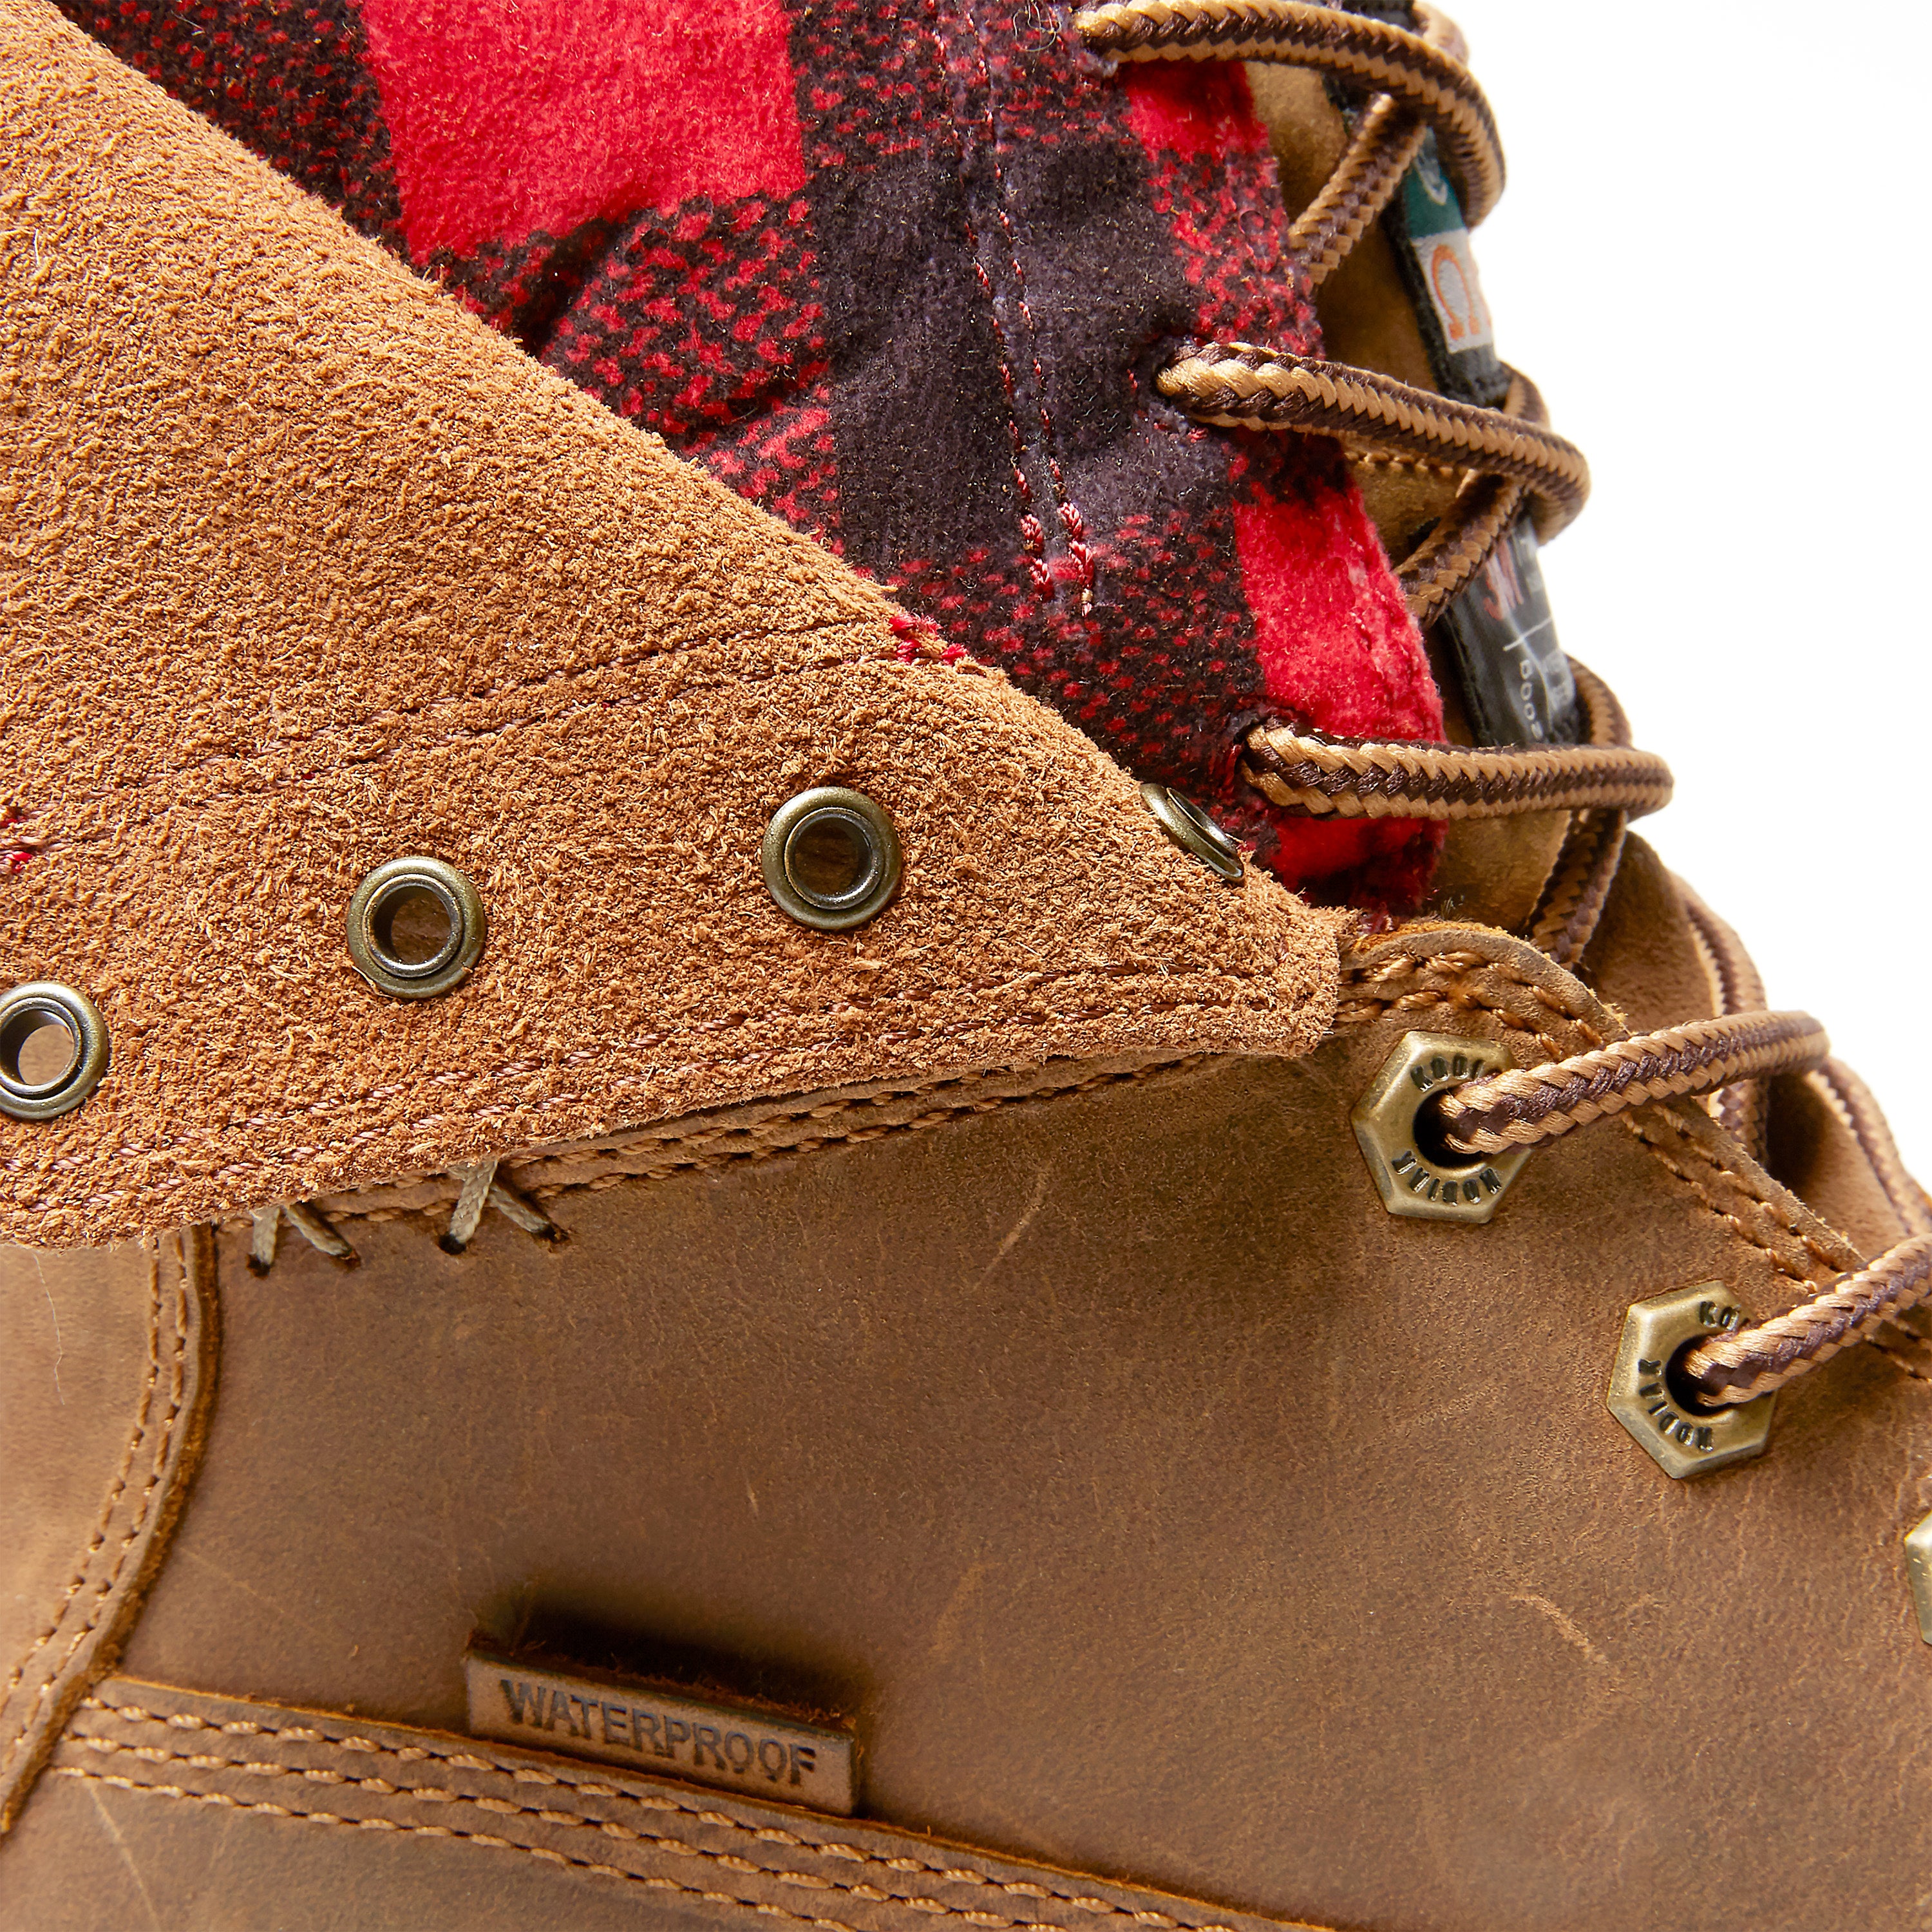 Kodiak Bralorne Composite Toe 8" Women's Safety Boots | Brown | Sizes 5 - 11 Work Boots - Cleanflow